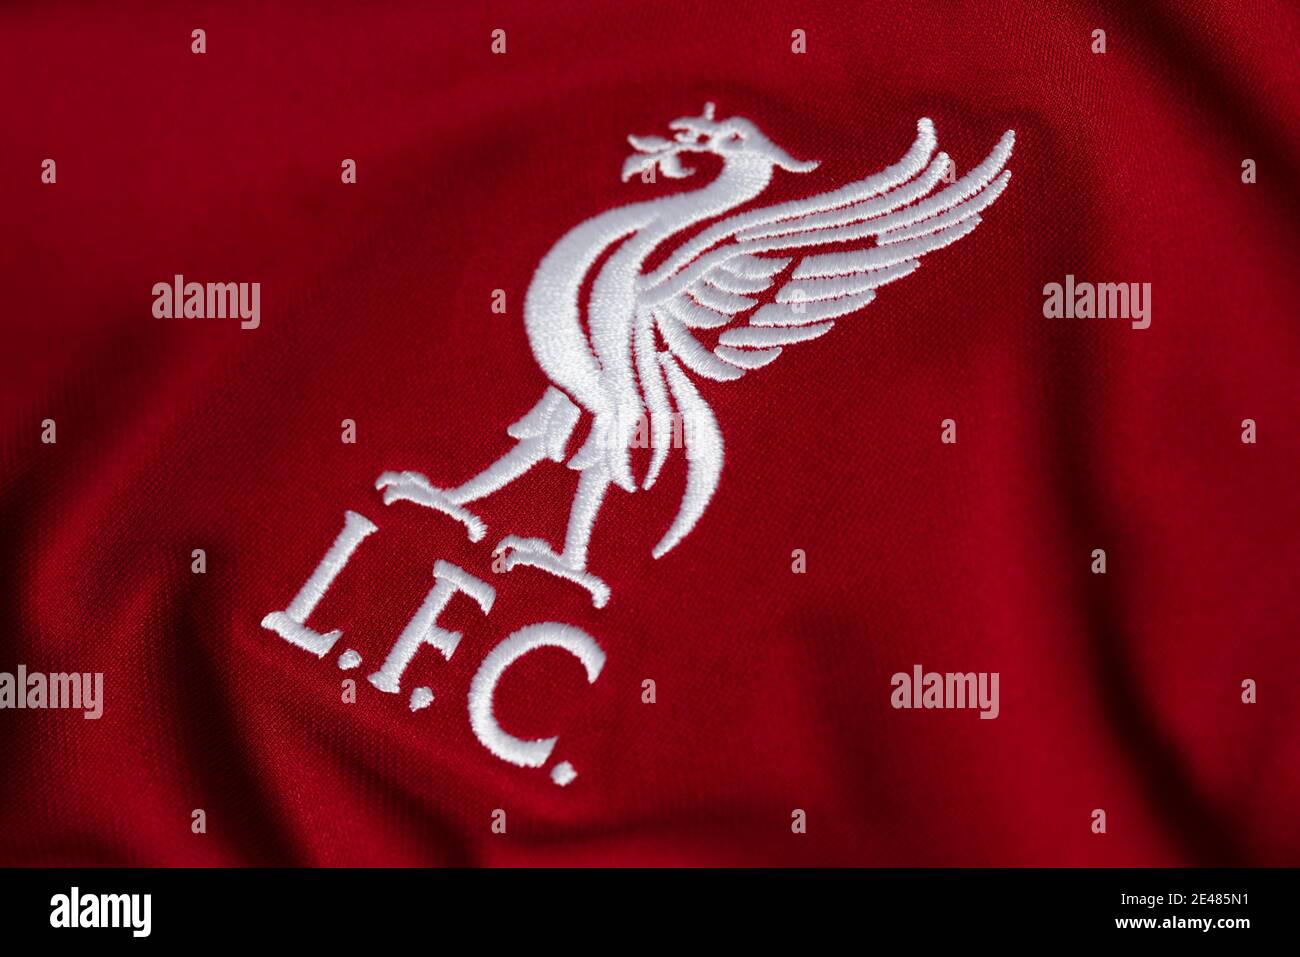 Liverpool FC Plüschbär mit Wappen